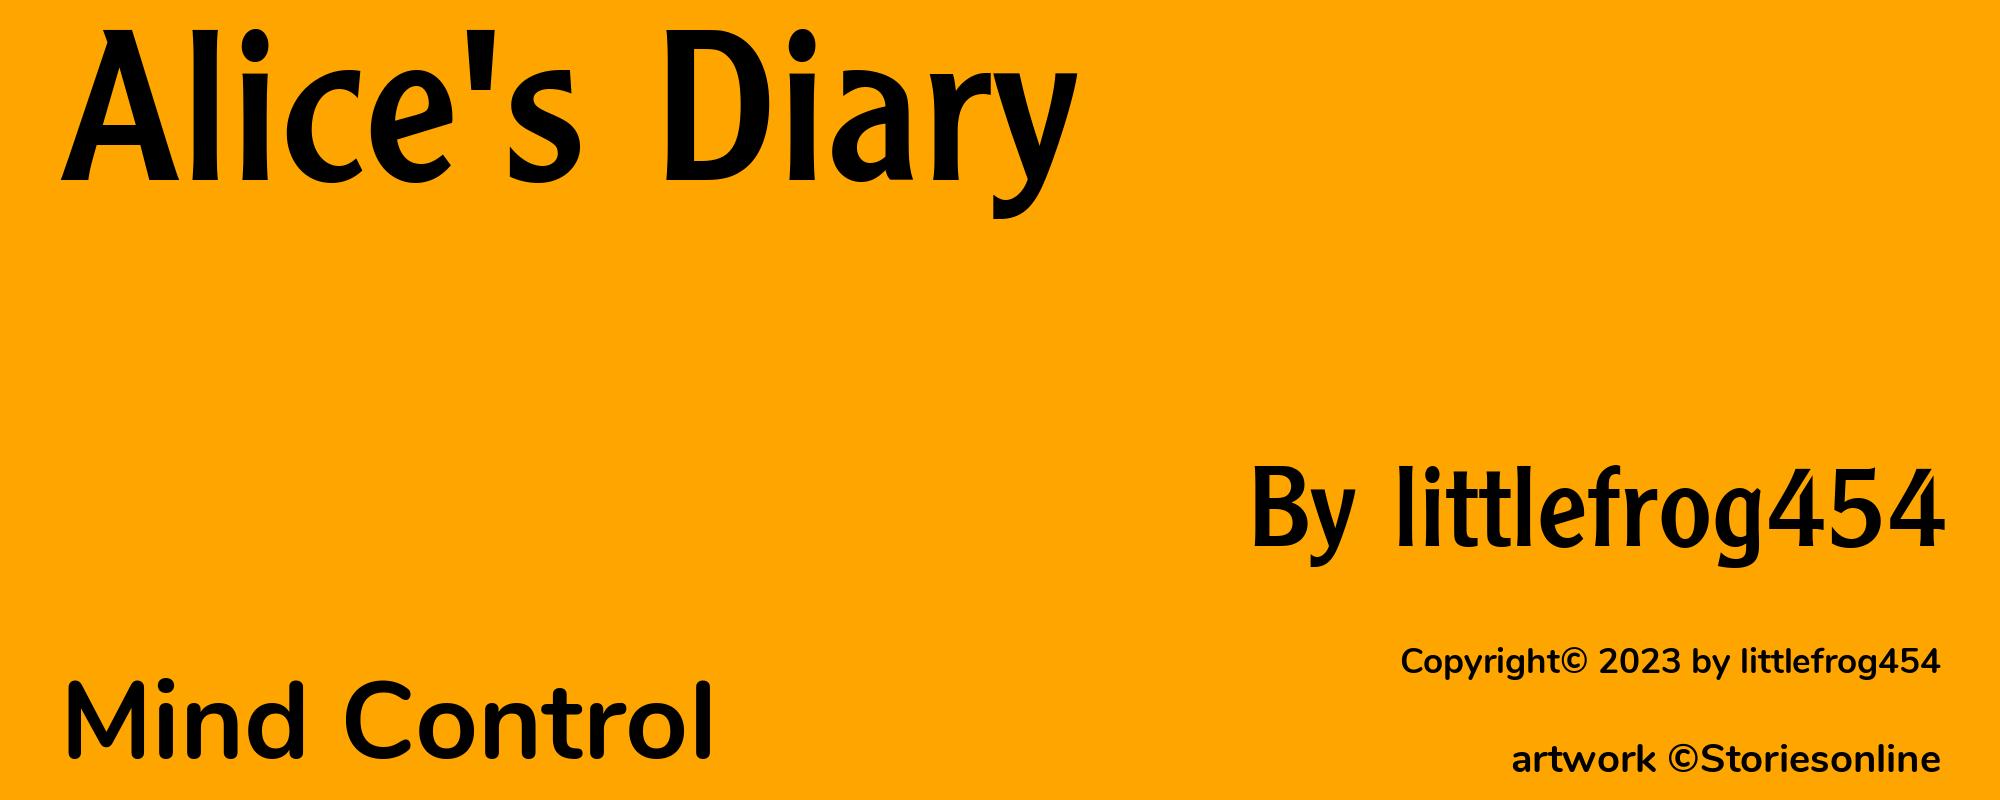 Alice's Diary - Cover